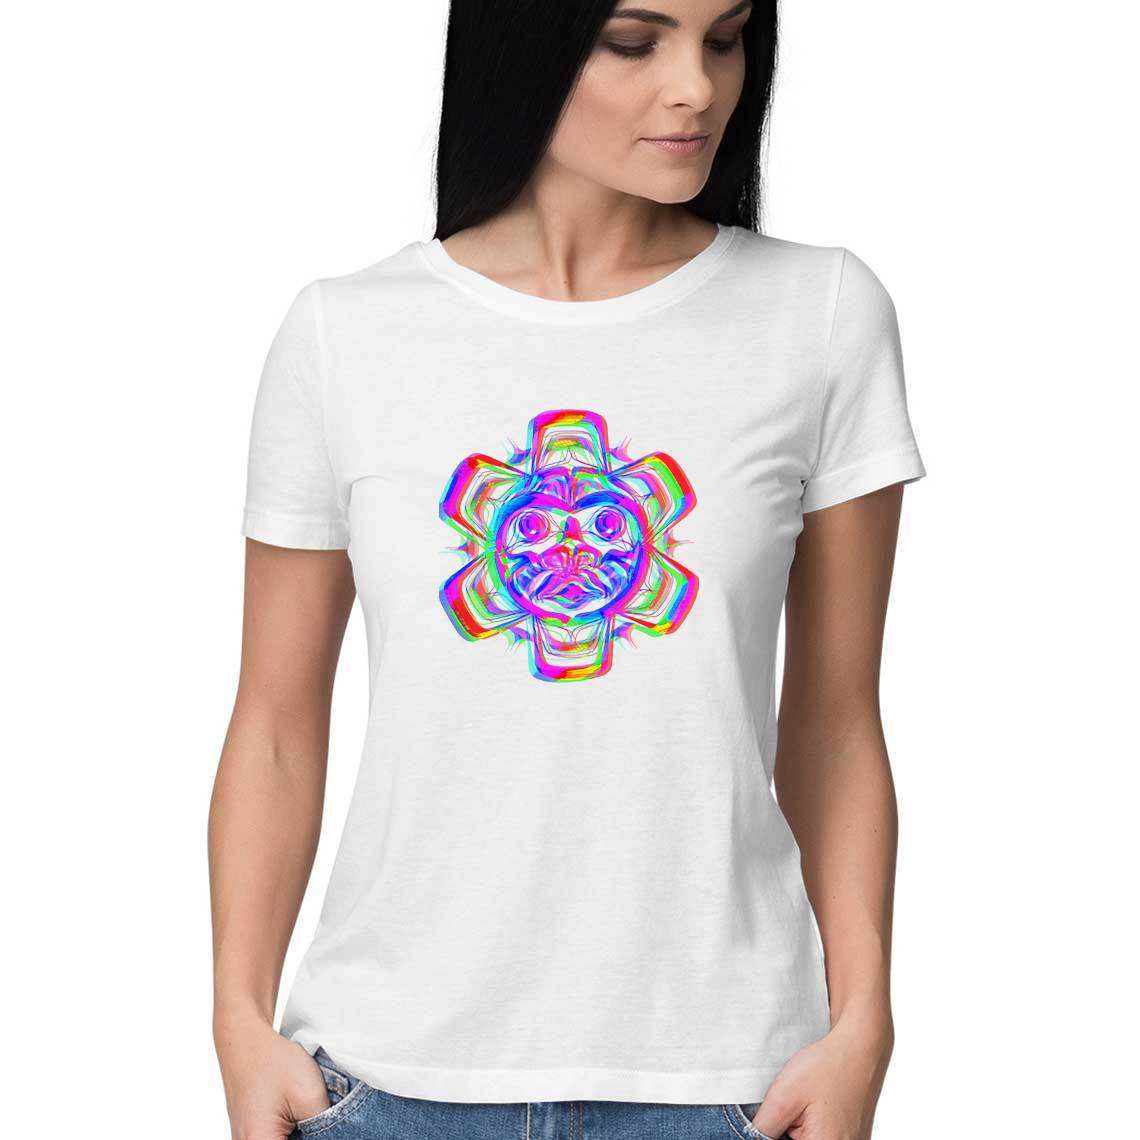 The Aztec Sun God Women's T-Shirt - CBD Store India